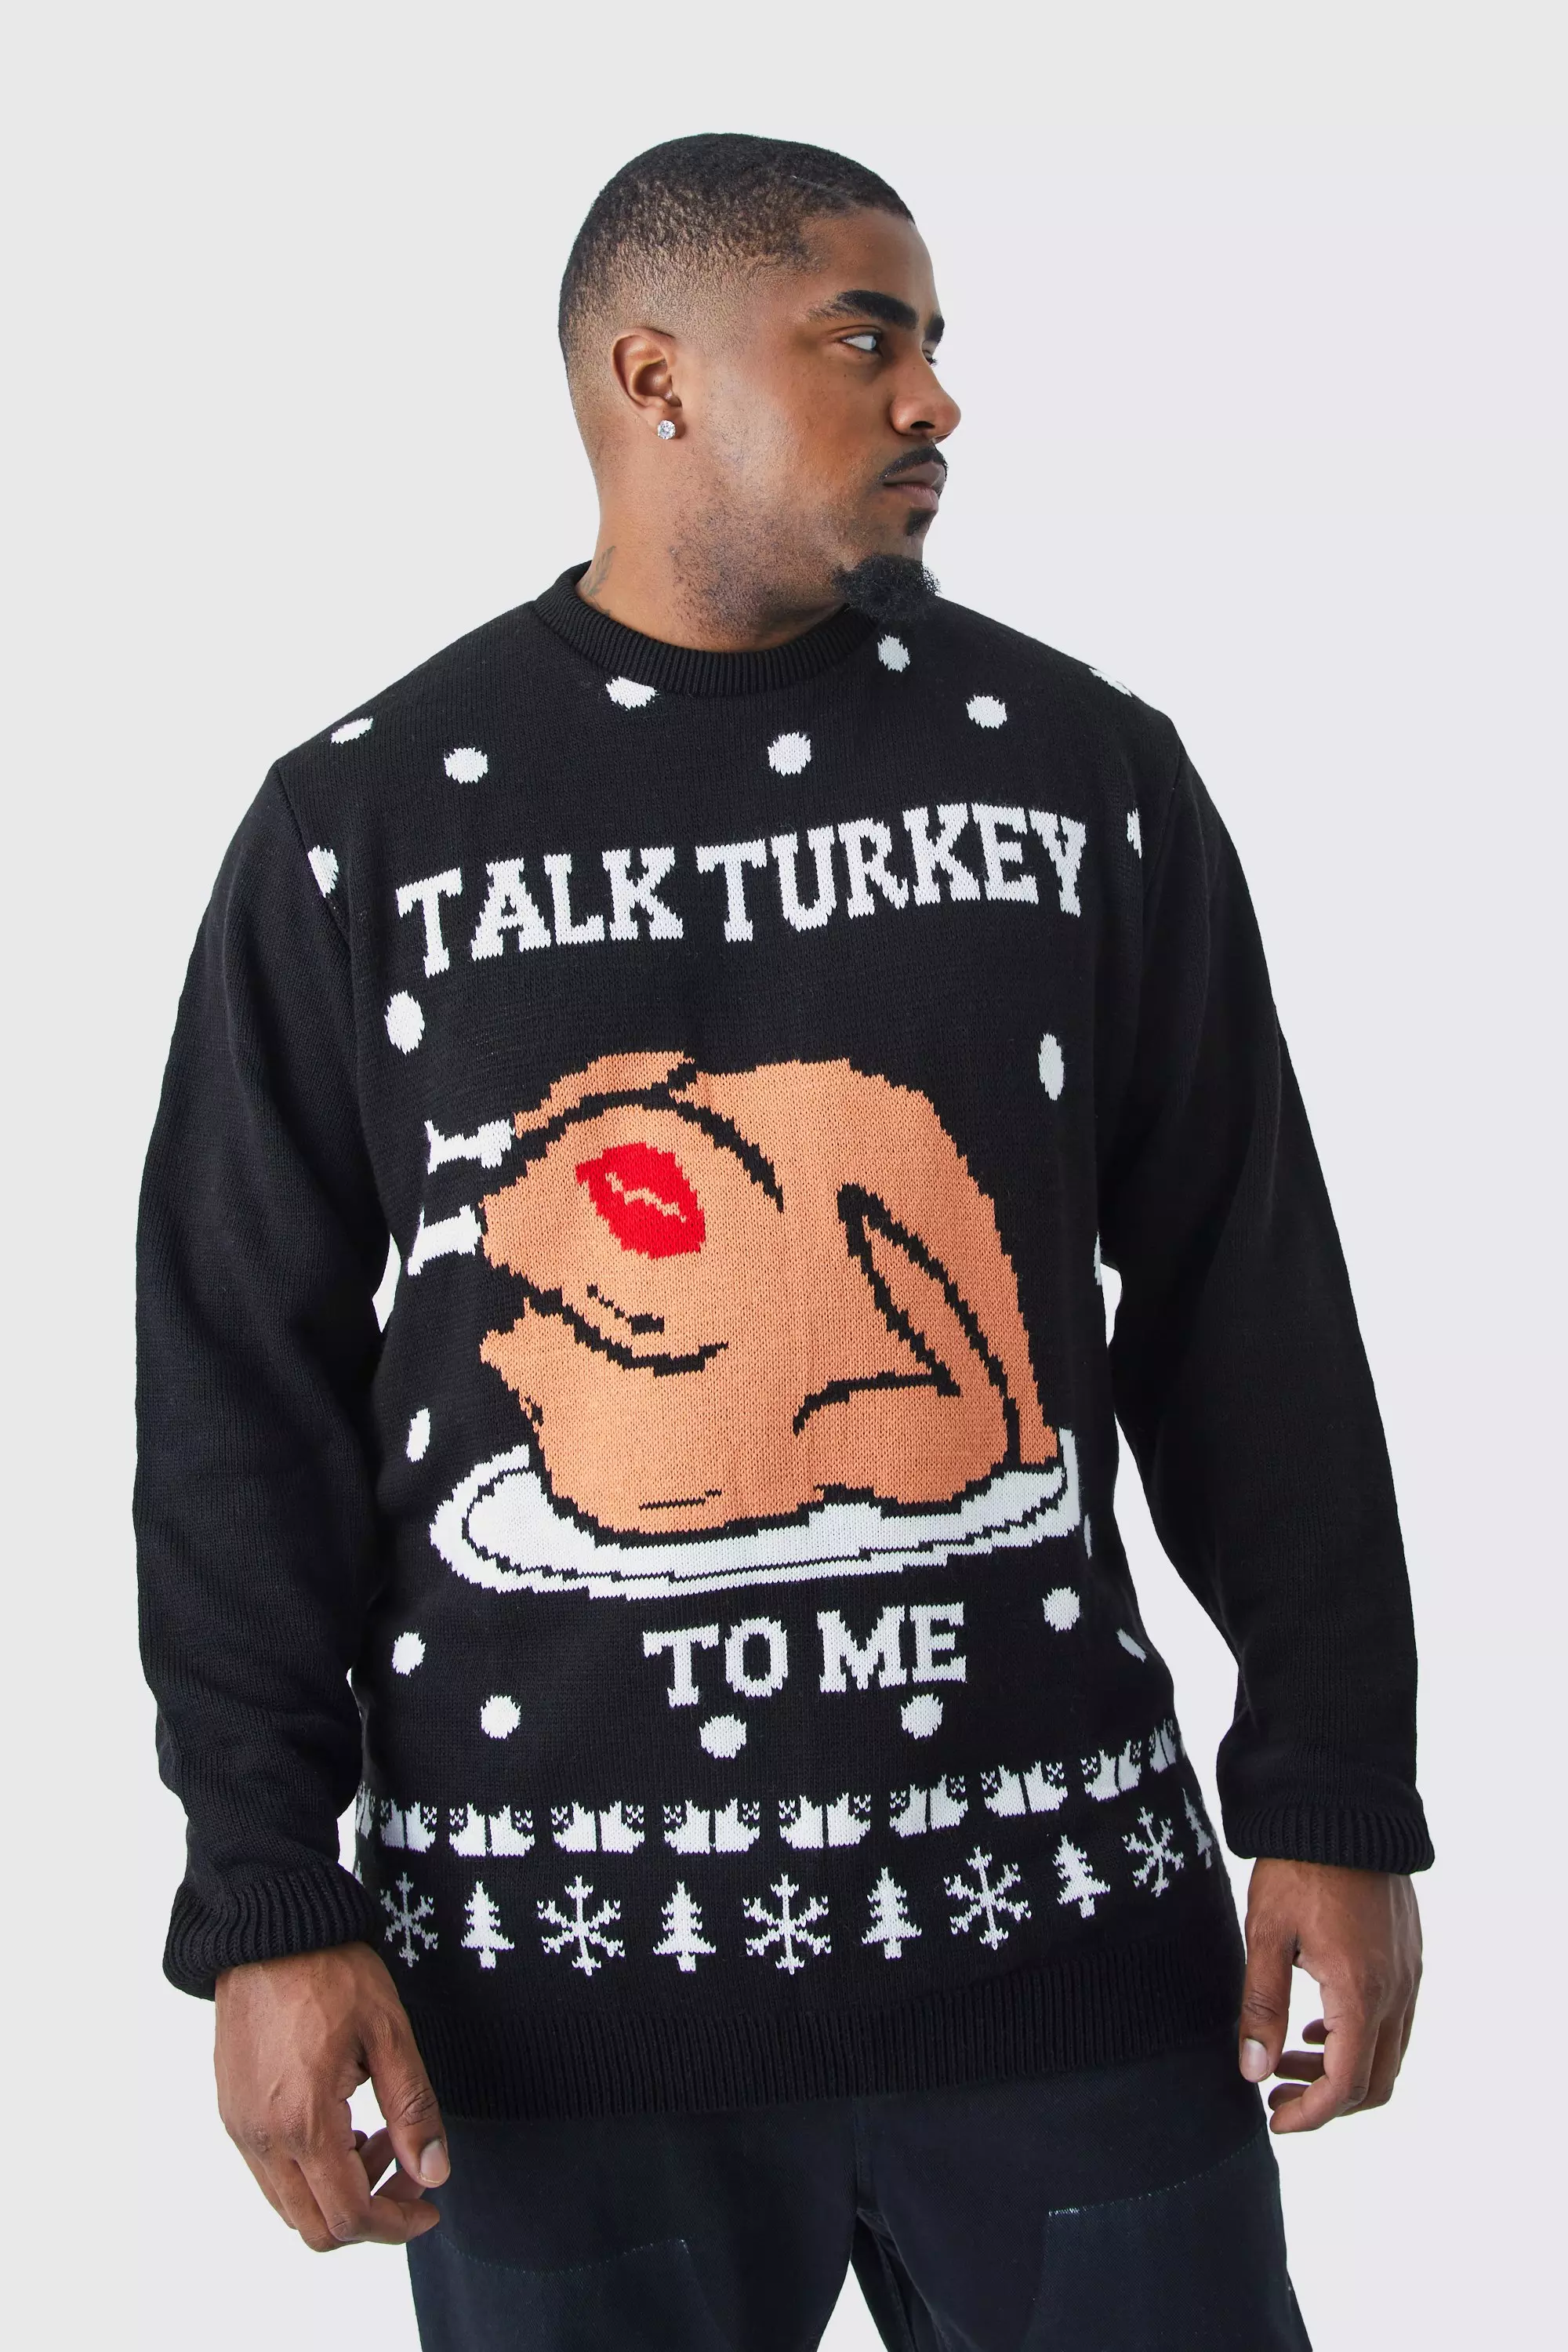 Plus Talk Turkey To Me Christmas Sweater Black